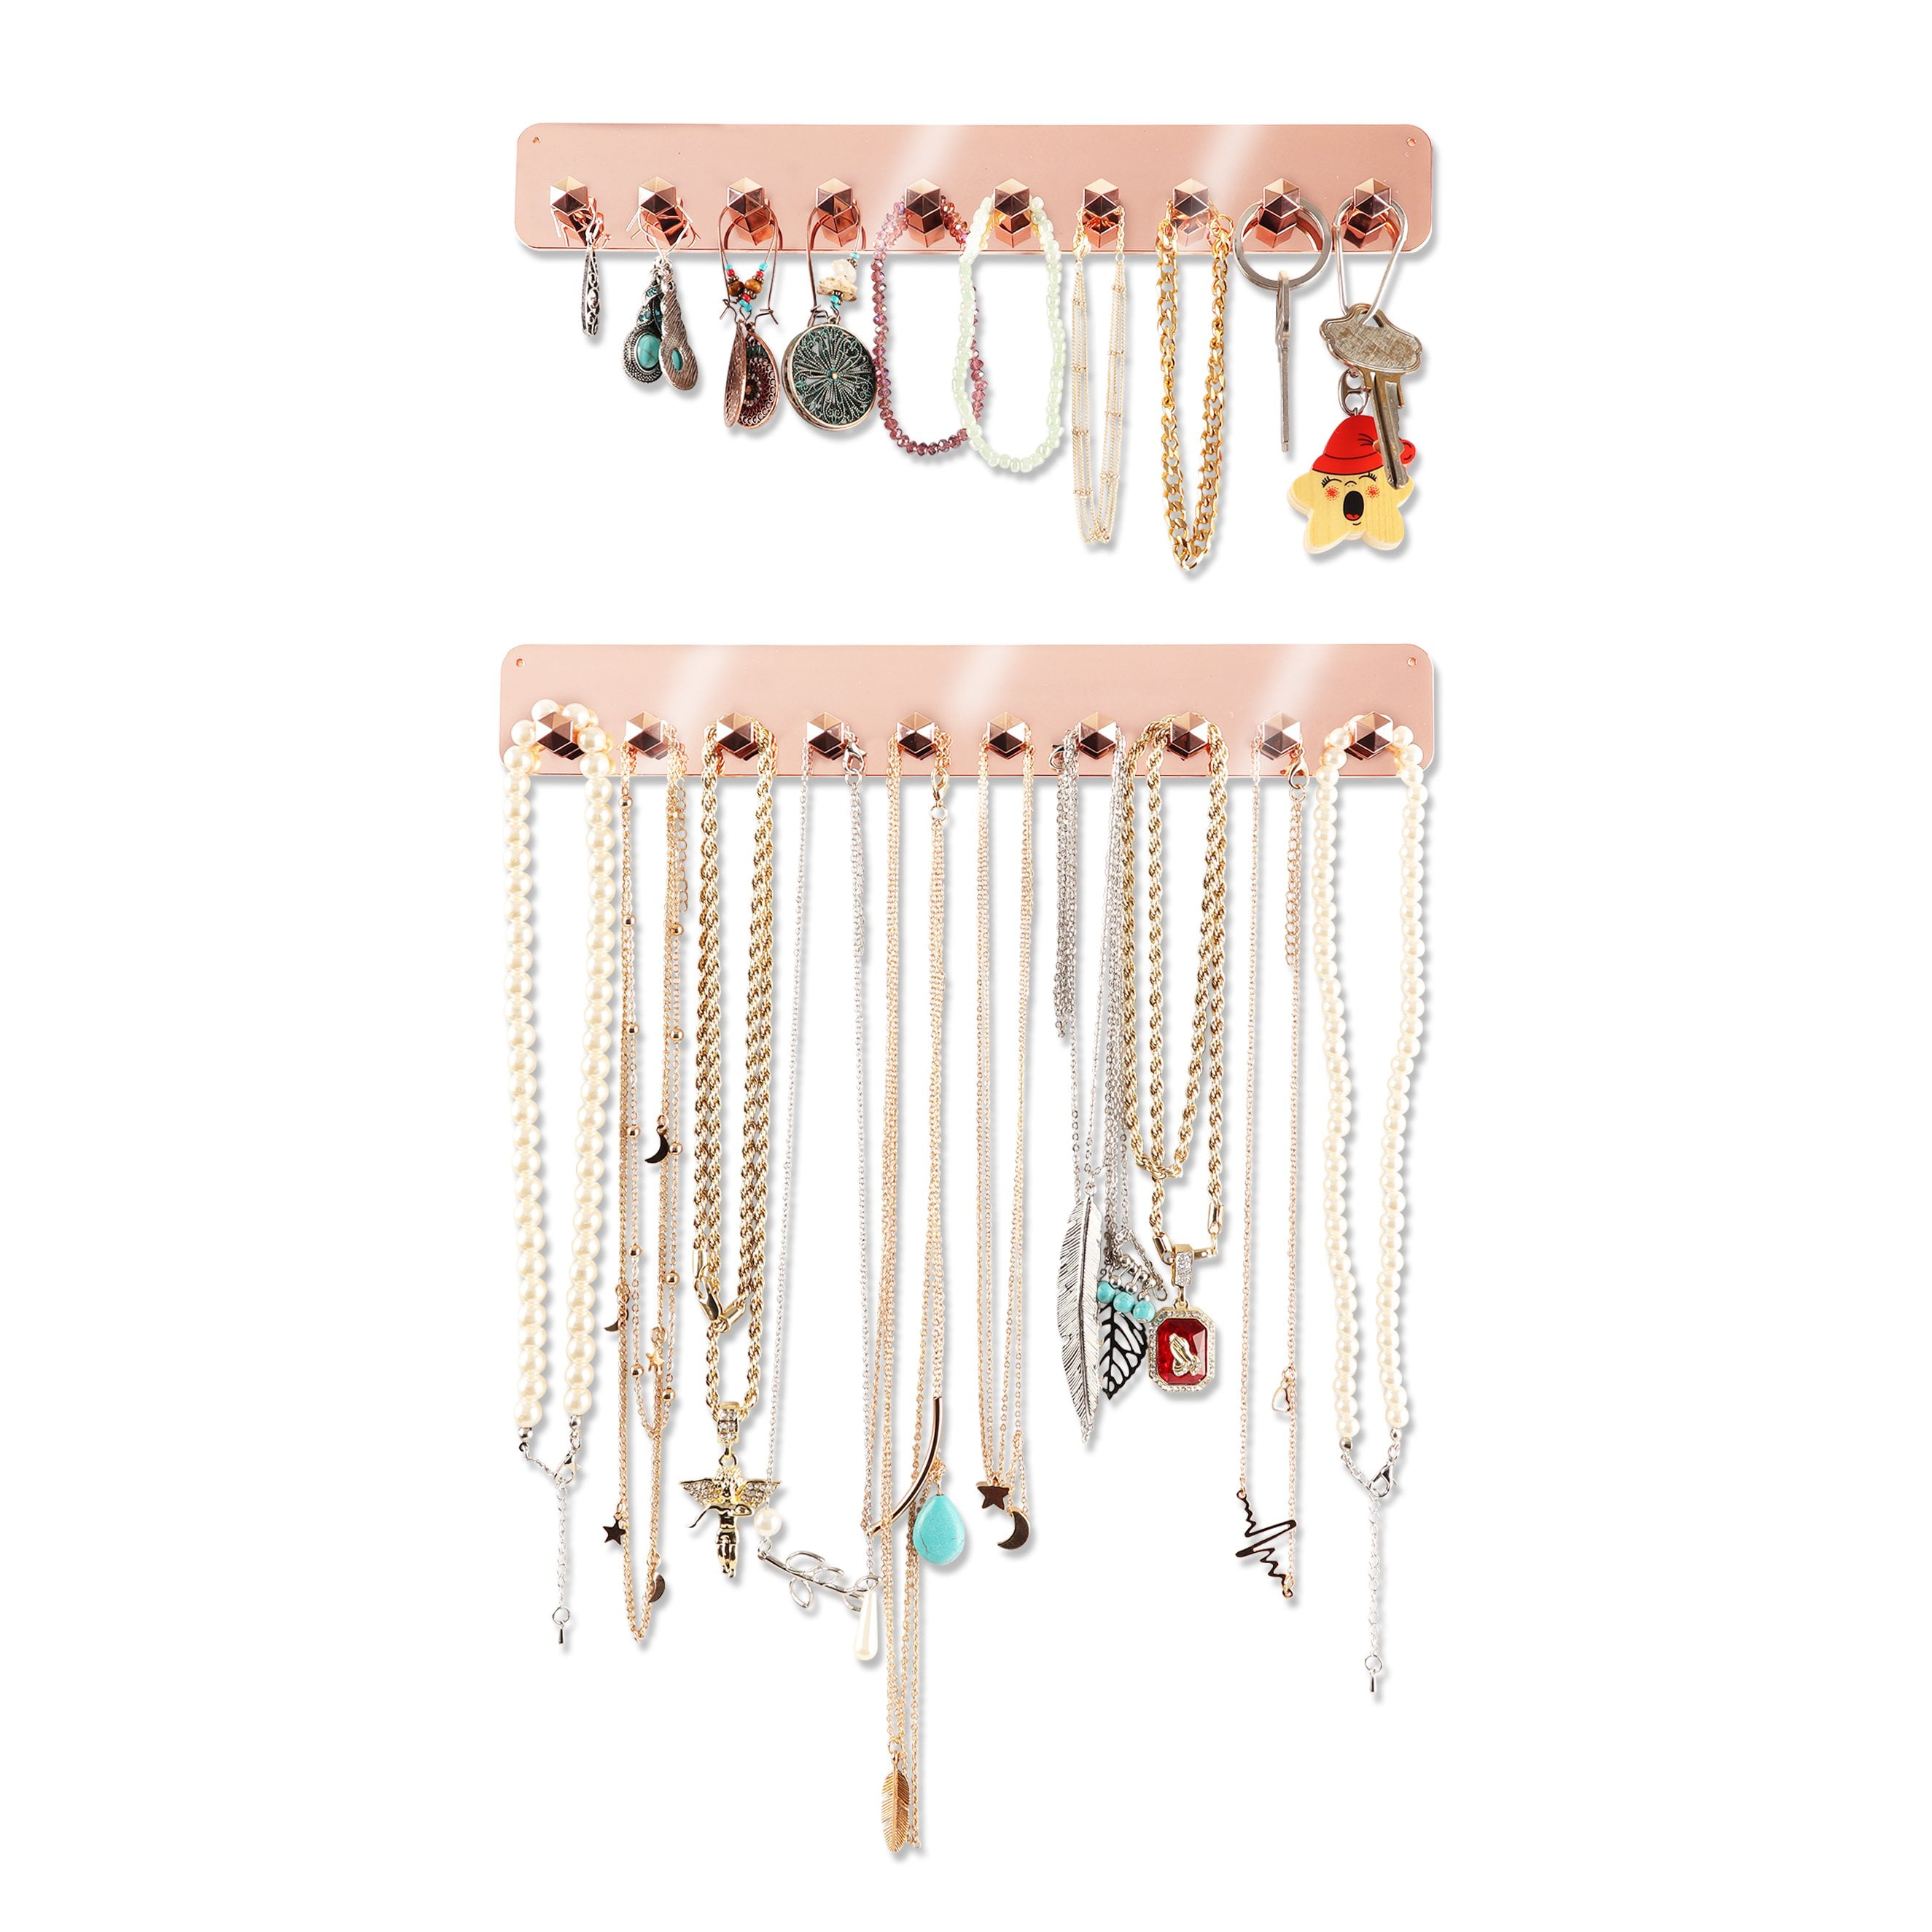 LARGE Wall Hanger Holder Mount For Necklace Earrings Jewellery Bracelet Metal UK 